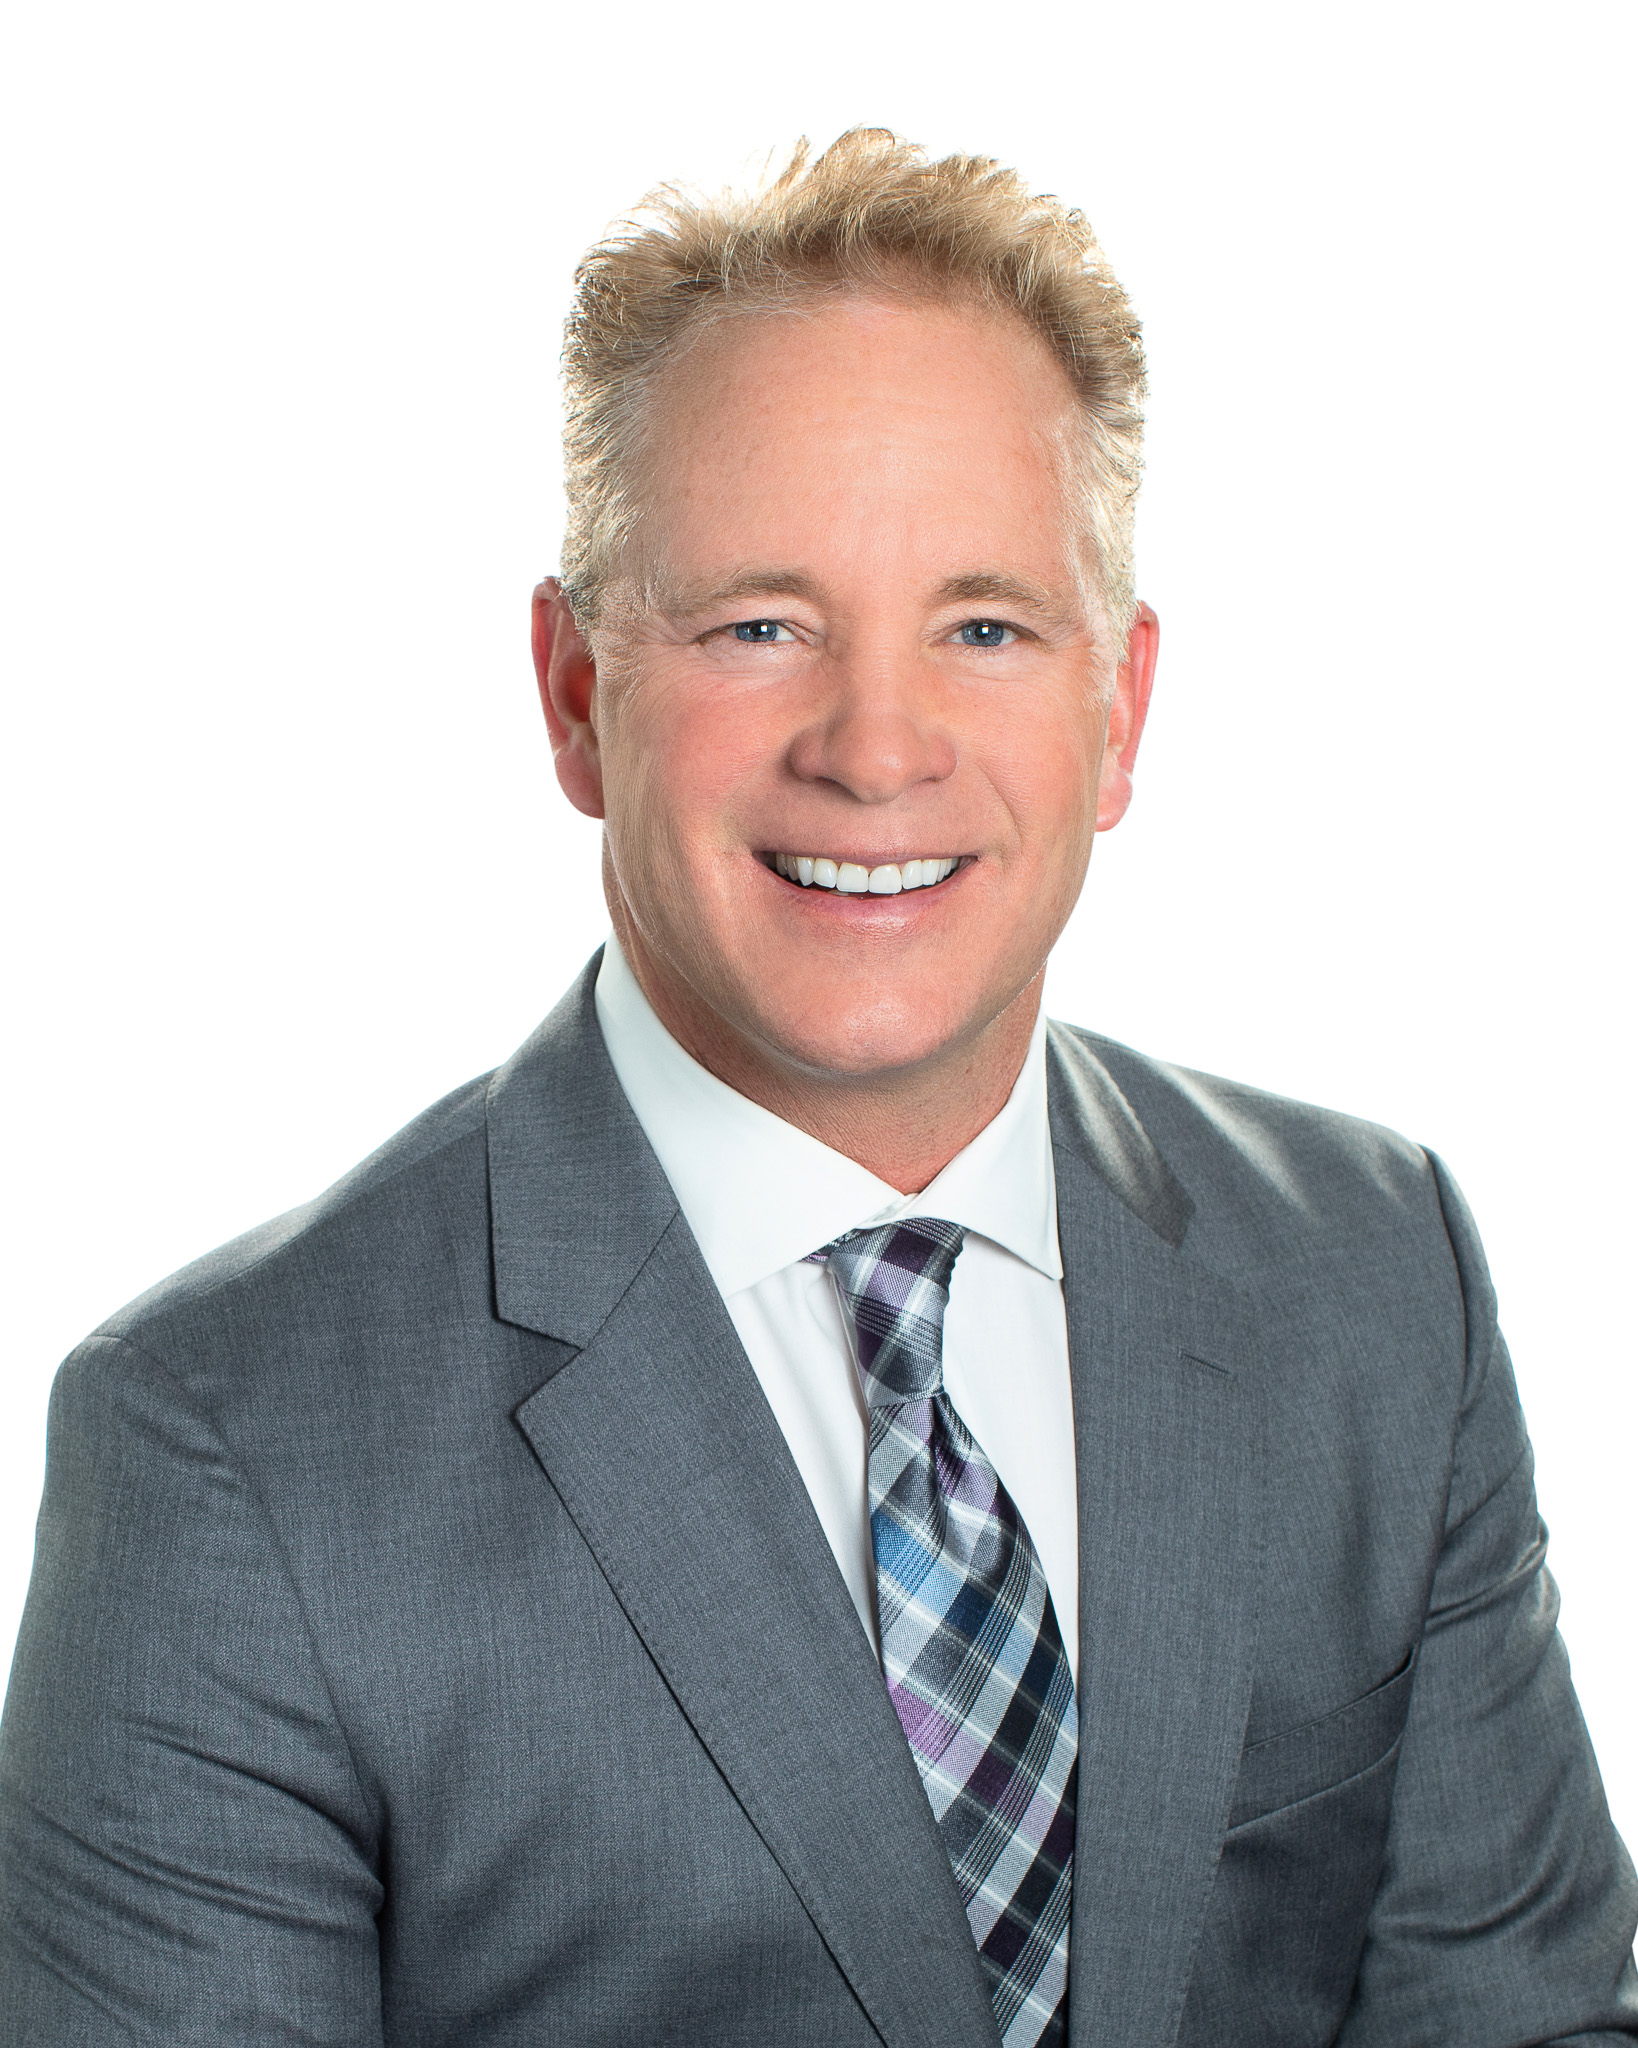 Greg Sudderth - CEO & Strategic Consultant of Strategic Services Group in Michigan